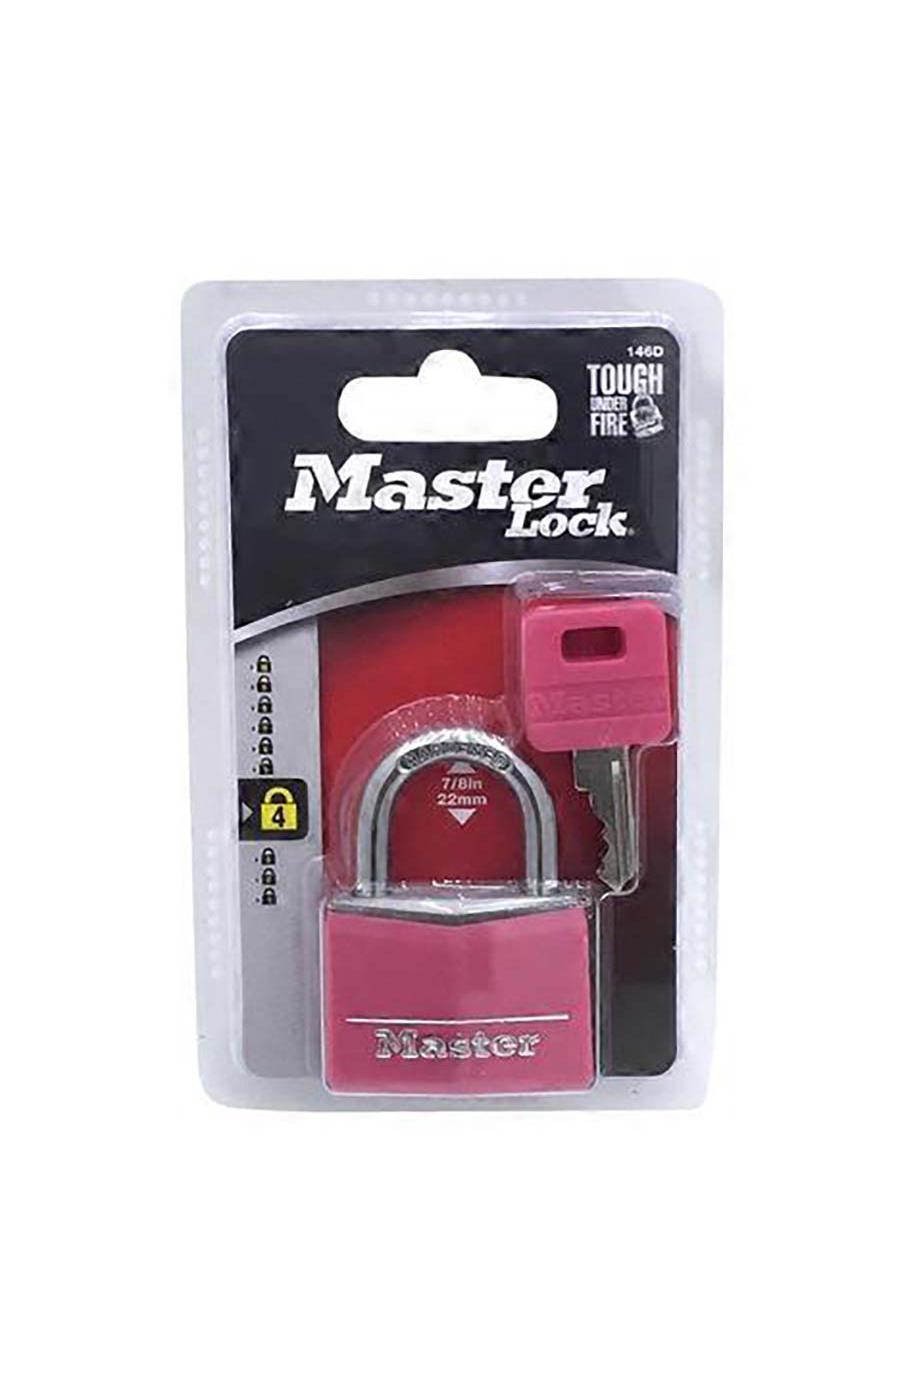 Master Lock 146D Solid Body Padlock - Pink; image 1 of 2